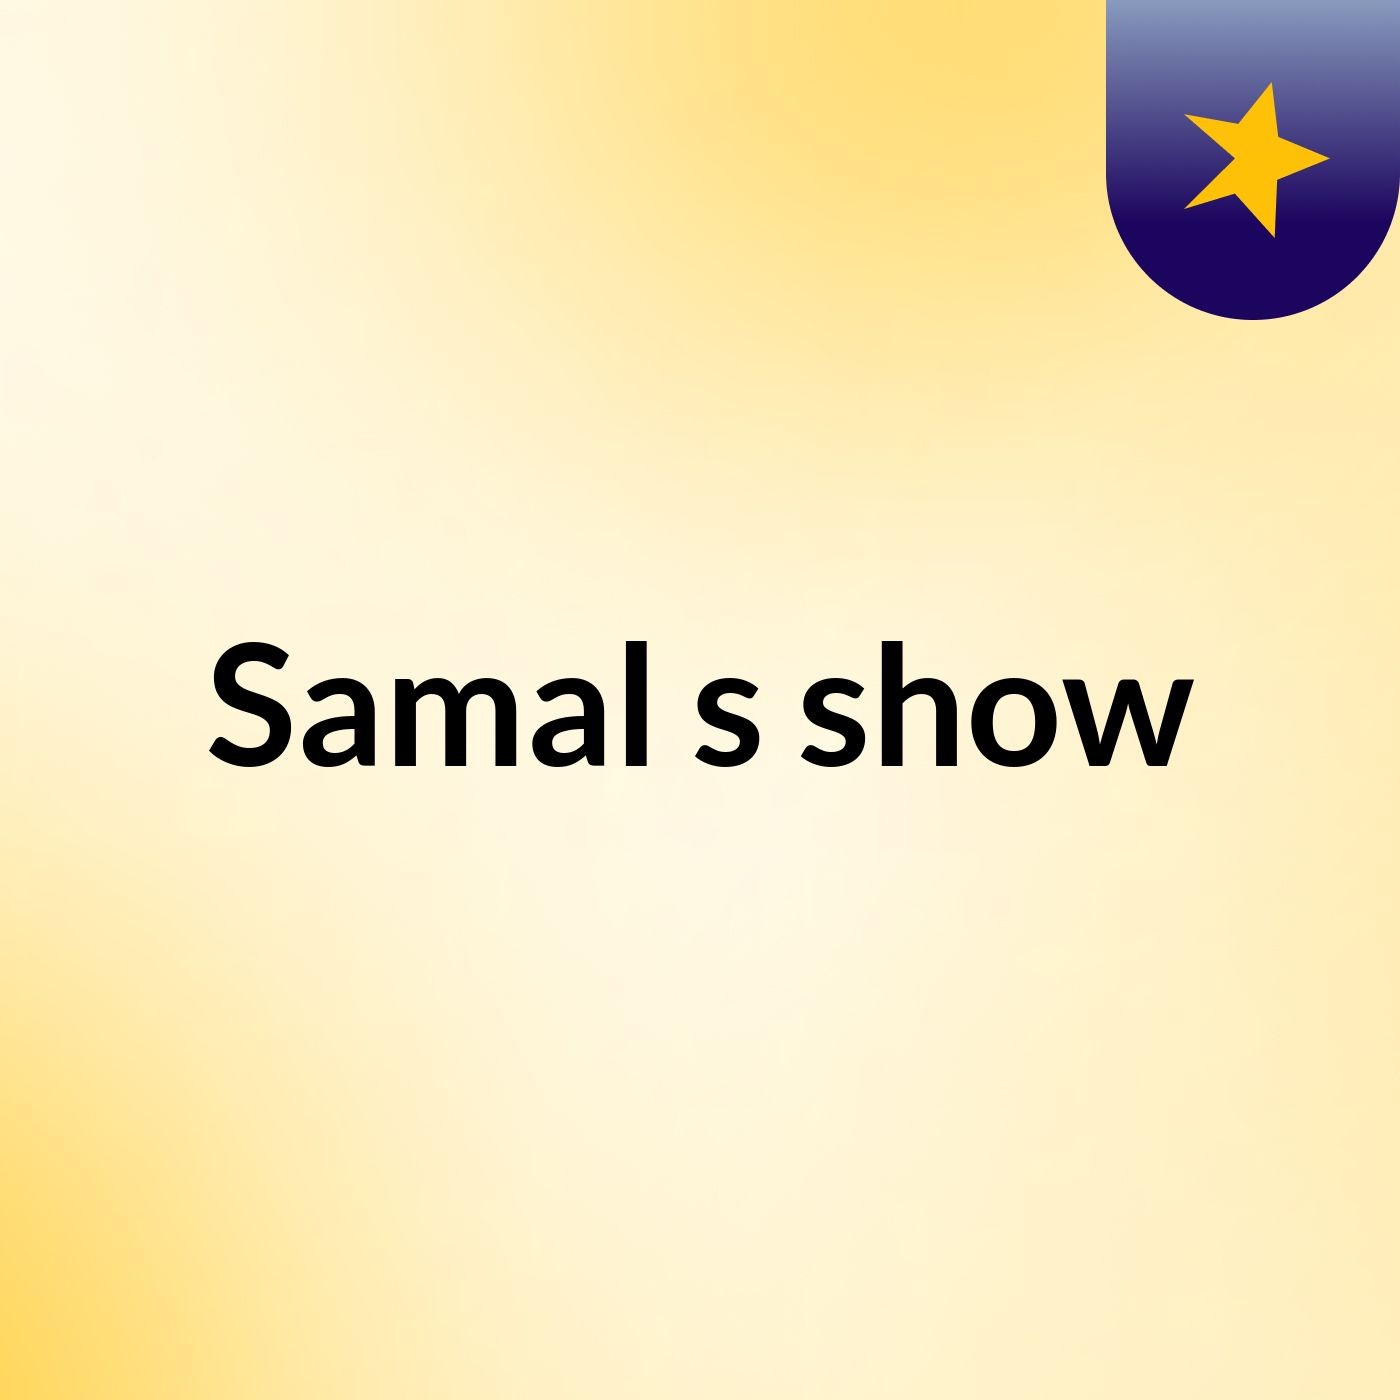 Samal's show